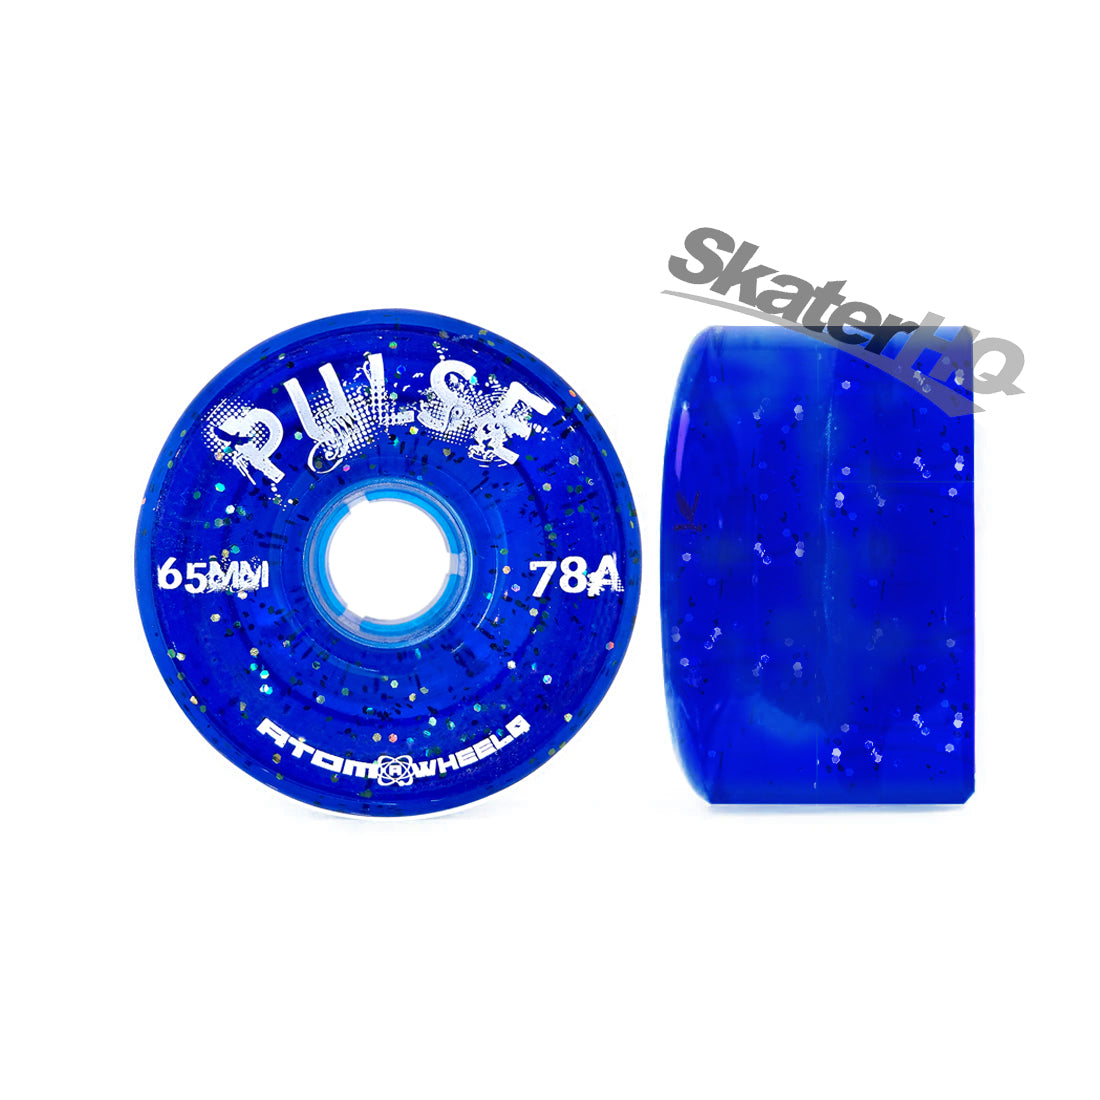 Atom Pulse Glitter 65x38mm 78a 4pk - Blue Roller Skate Wheels